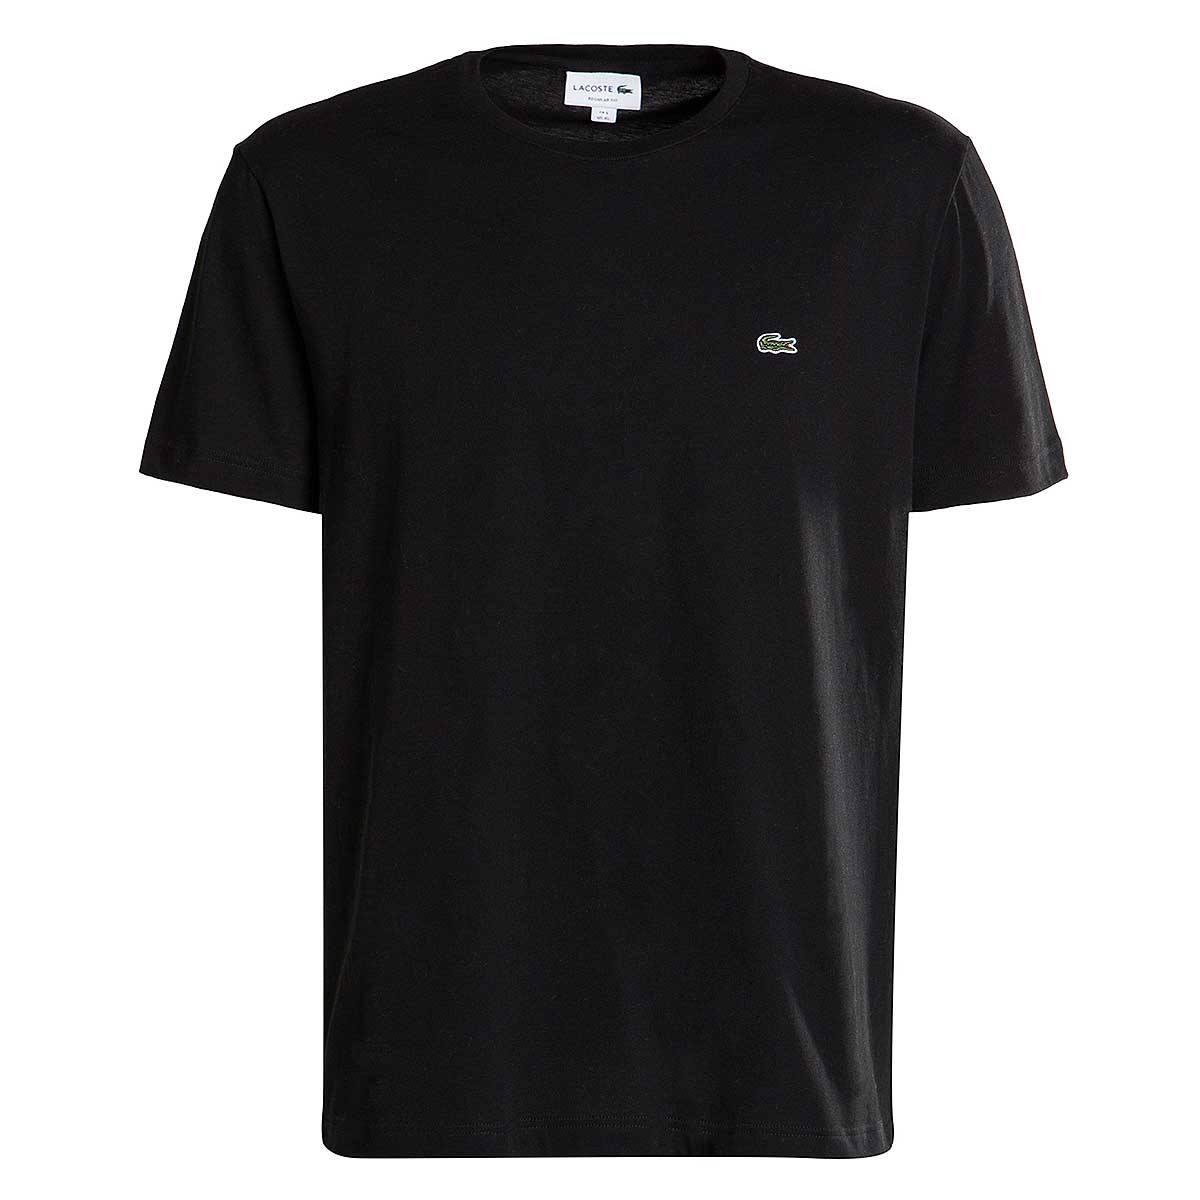 Lacoste Small Croc T-Shirt, Black